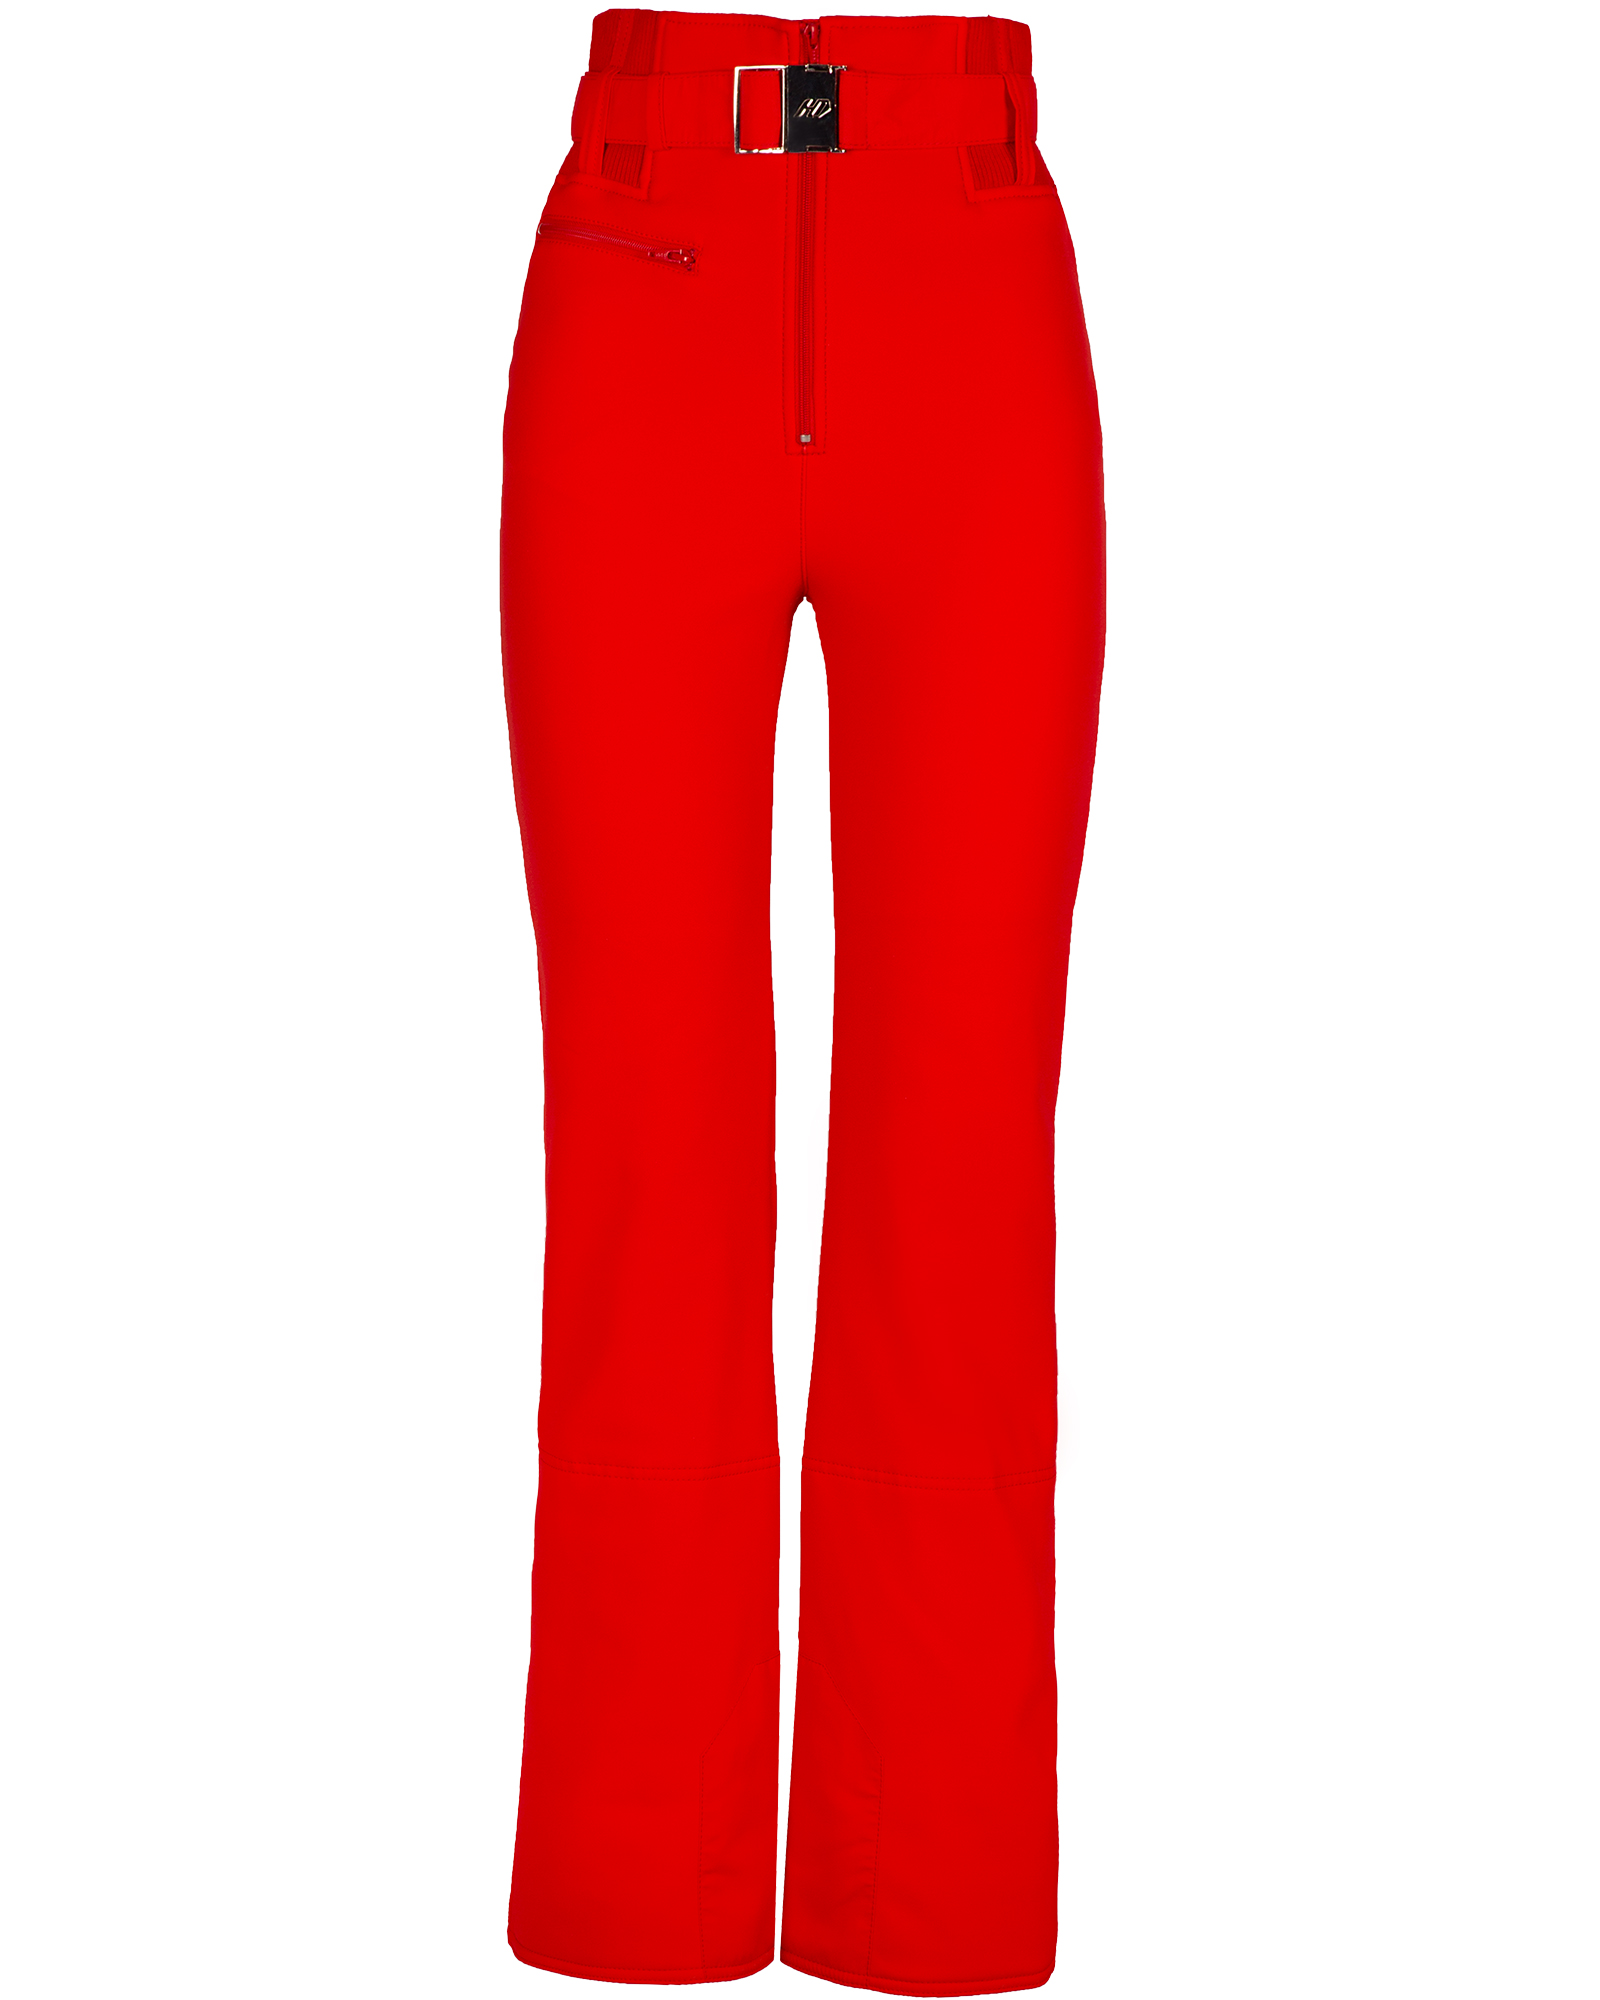 Duvillard Gridin Women’s Pants - Red 12